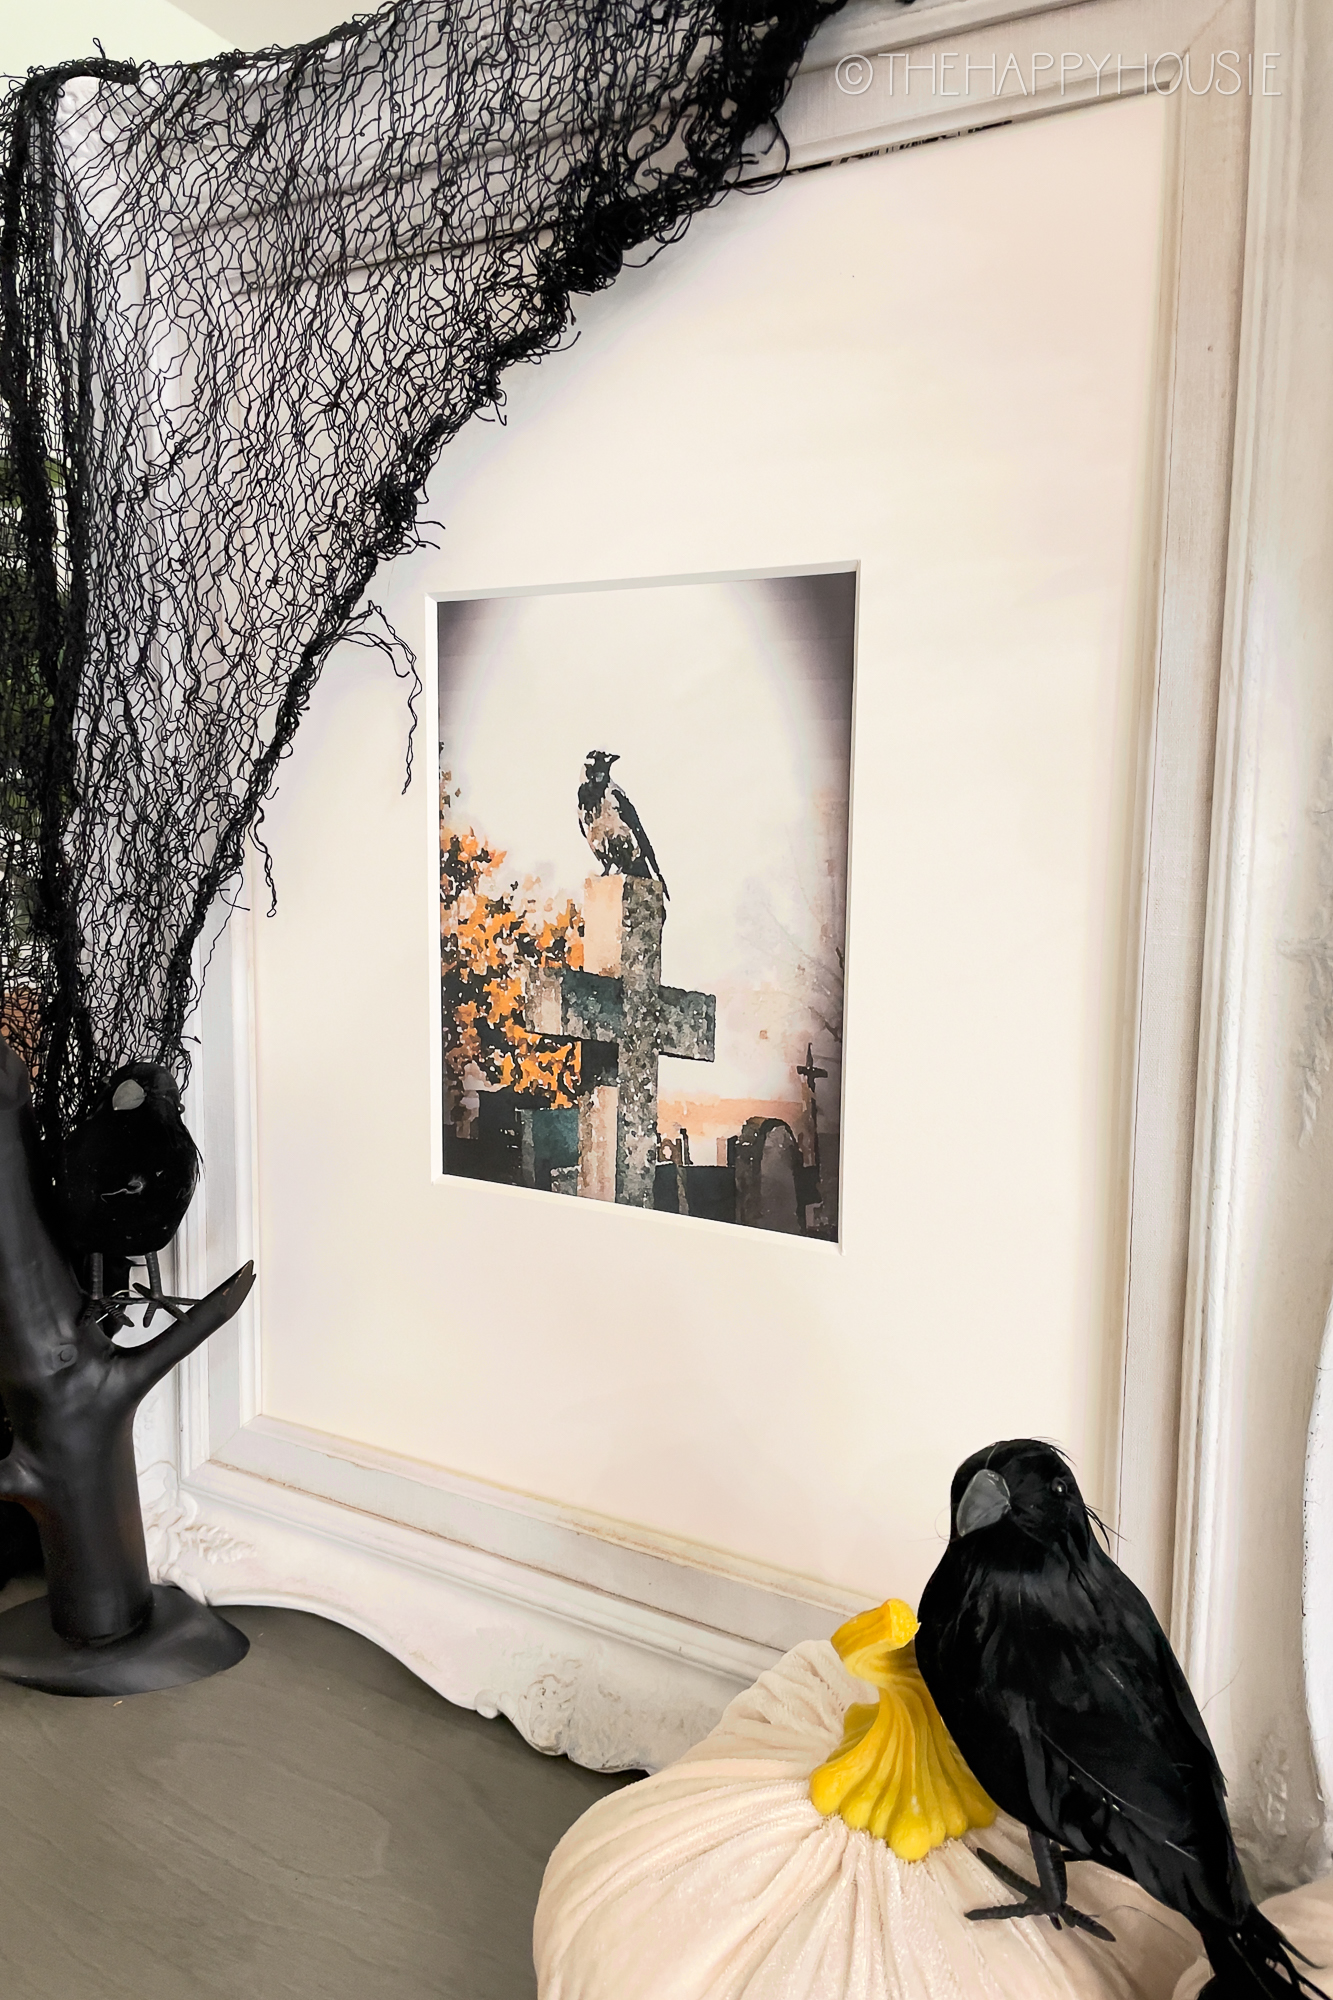 spooky Halloween art printable in a decorative frame